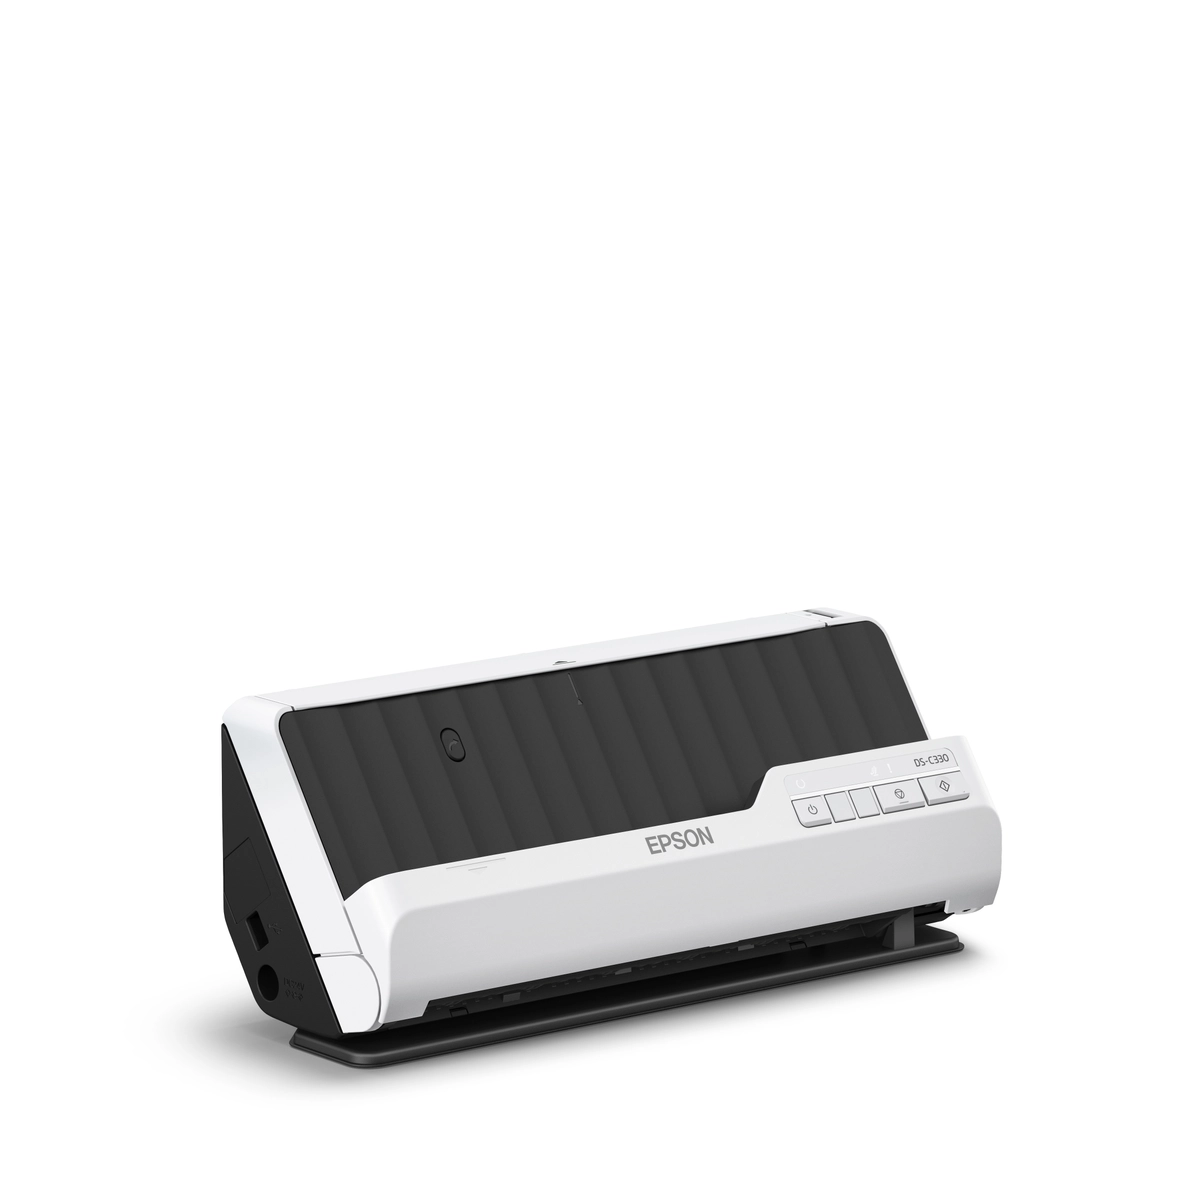 DS-C330 A4 Compact Desktop Scanner